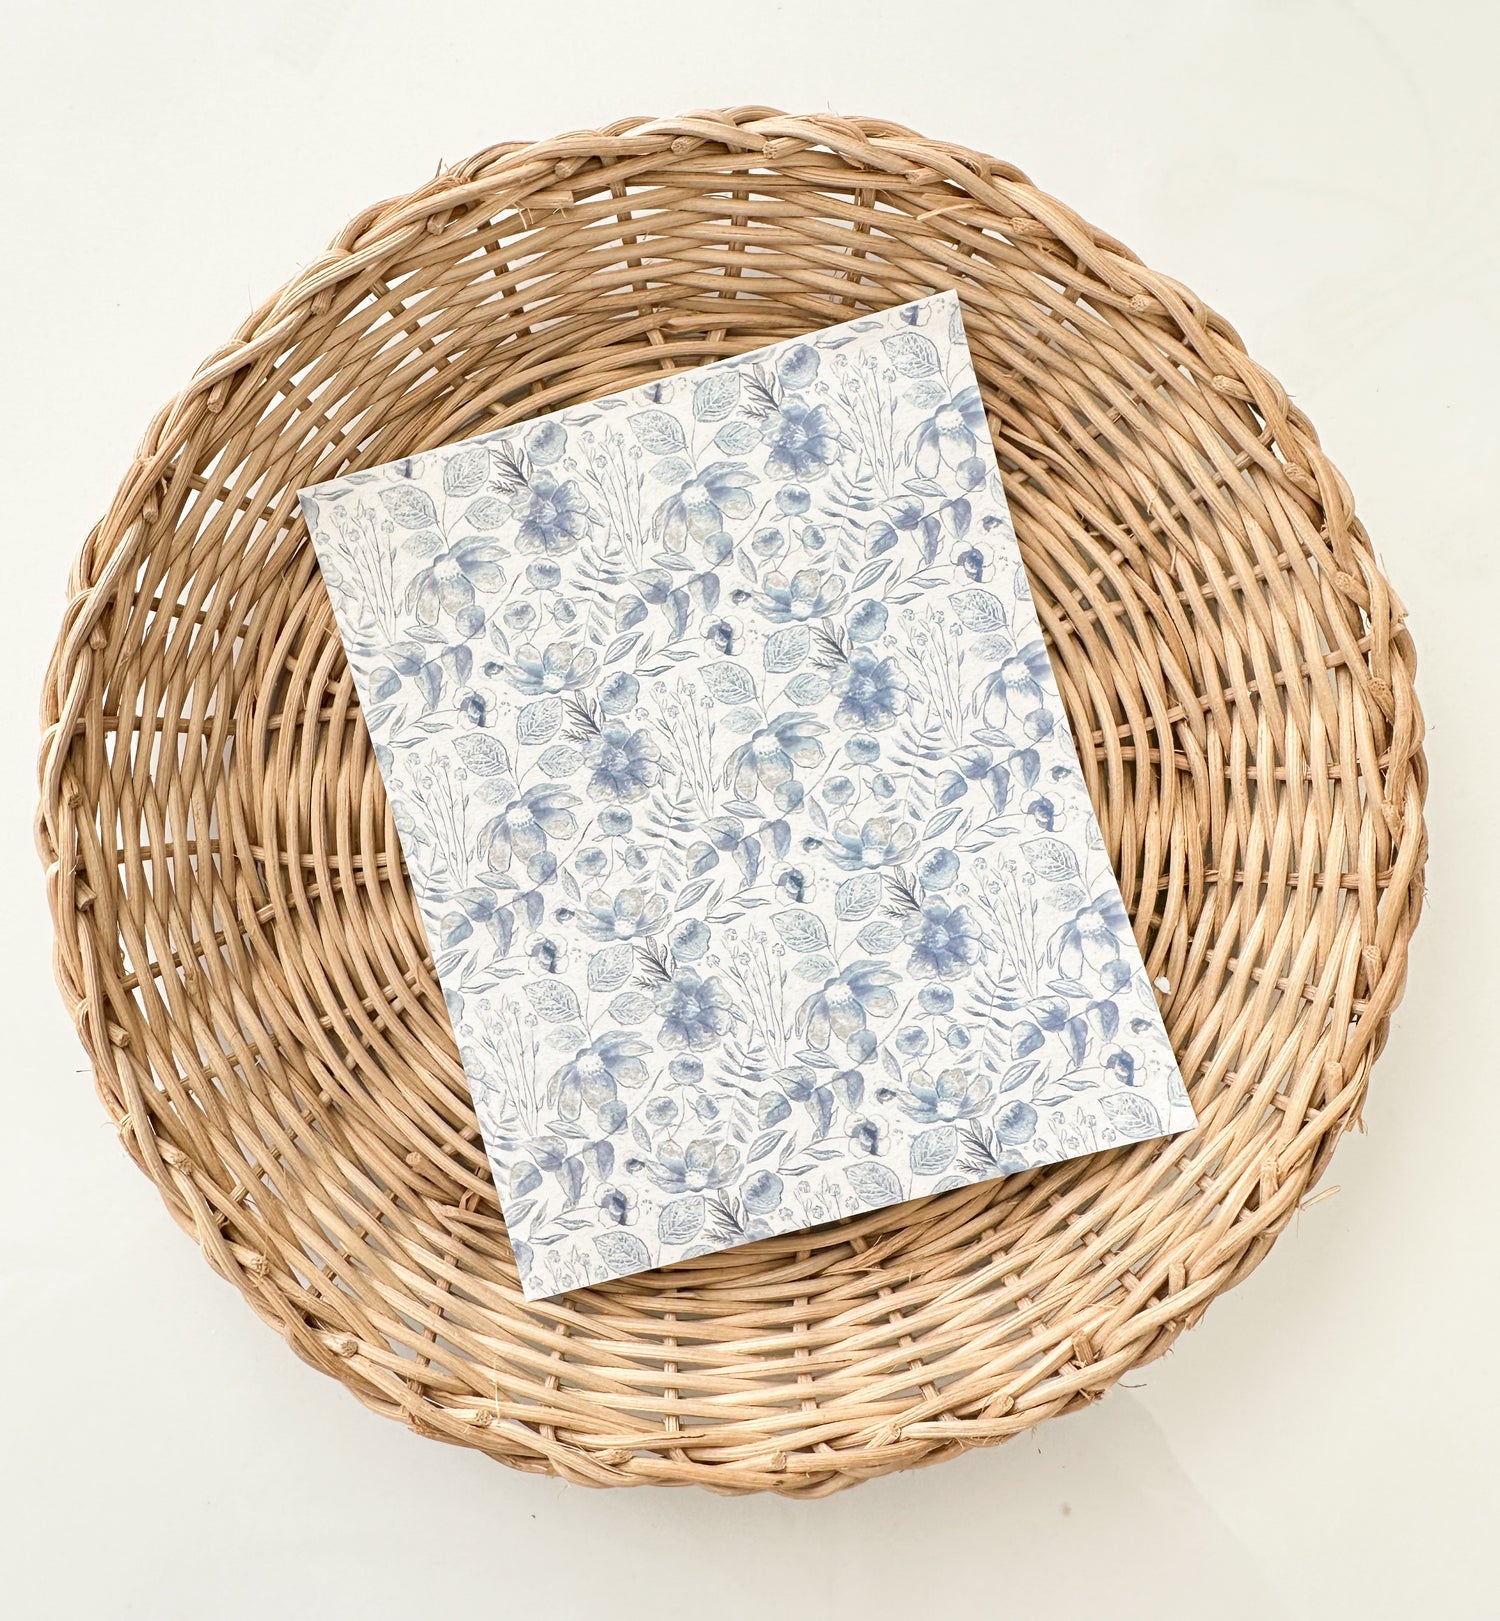 246 Soft Blue Floral Tranfer Paper